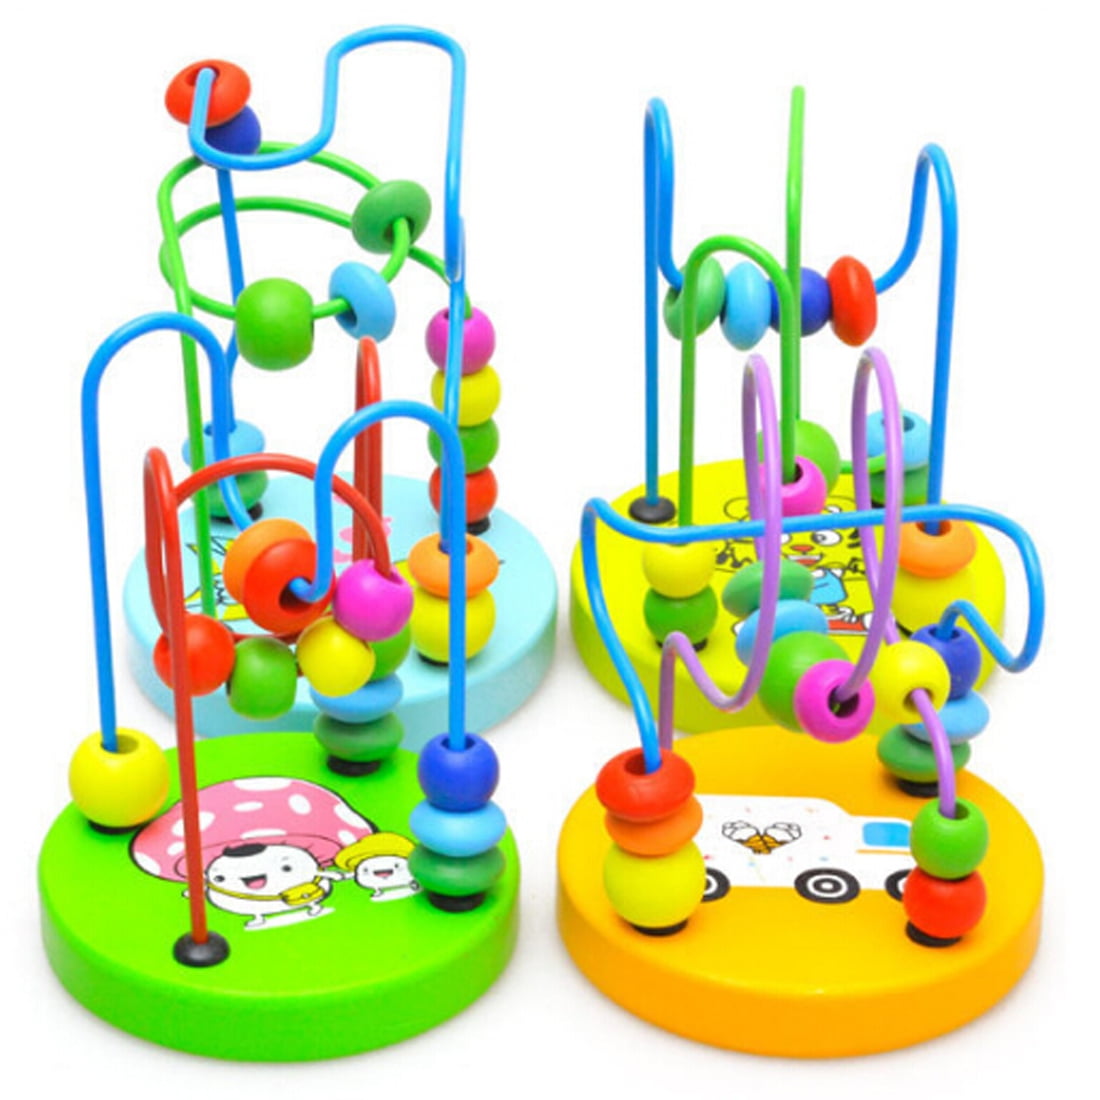 Mini Around Beads Educational Game Wooden Toys For Kids Children Baby Boys Girls 